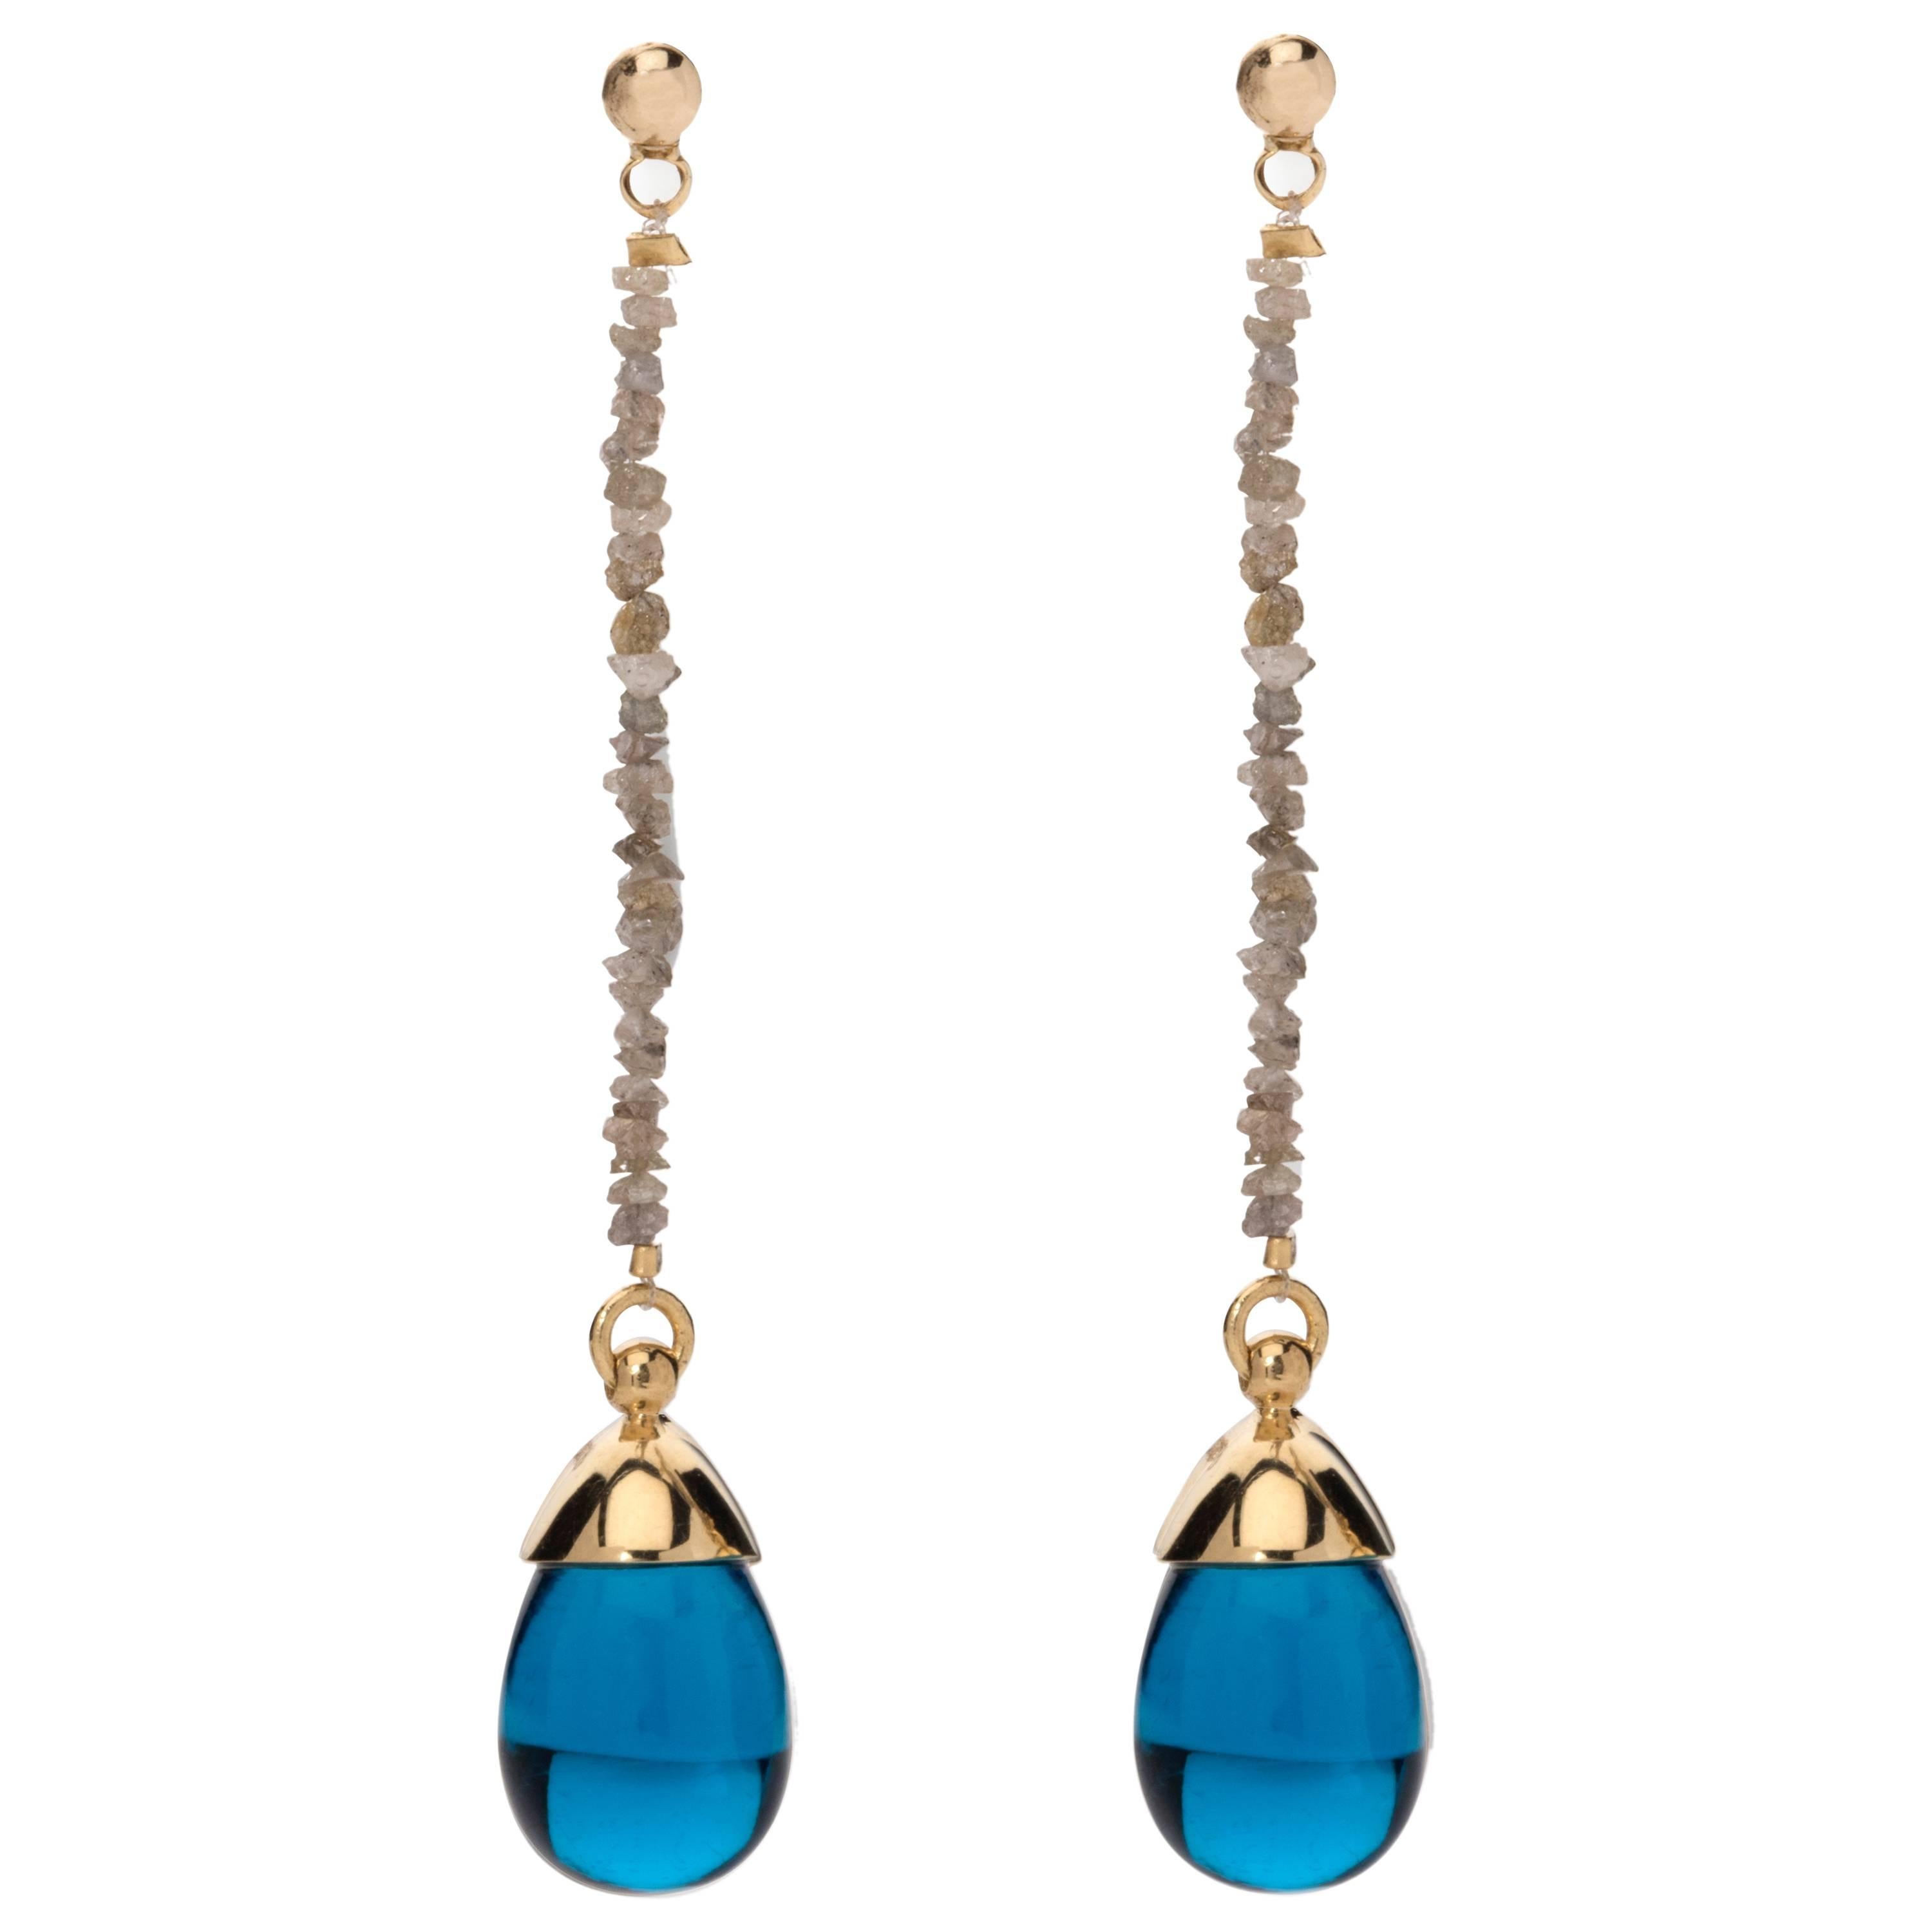 MAVIADA's Modern Minimalist Rough Cut Diamond London Blue 18K Gold Drop Earrings